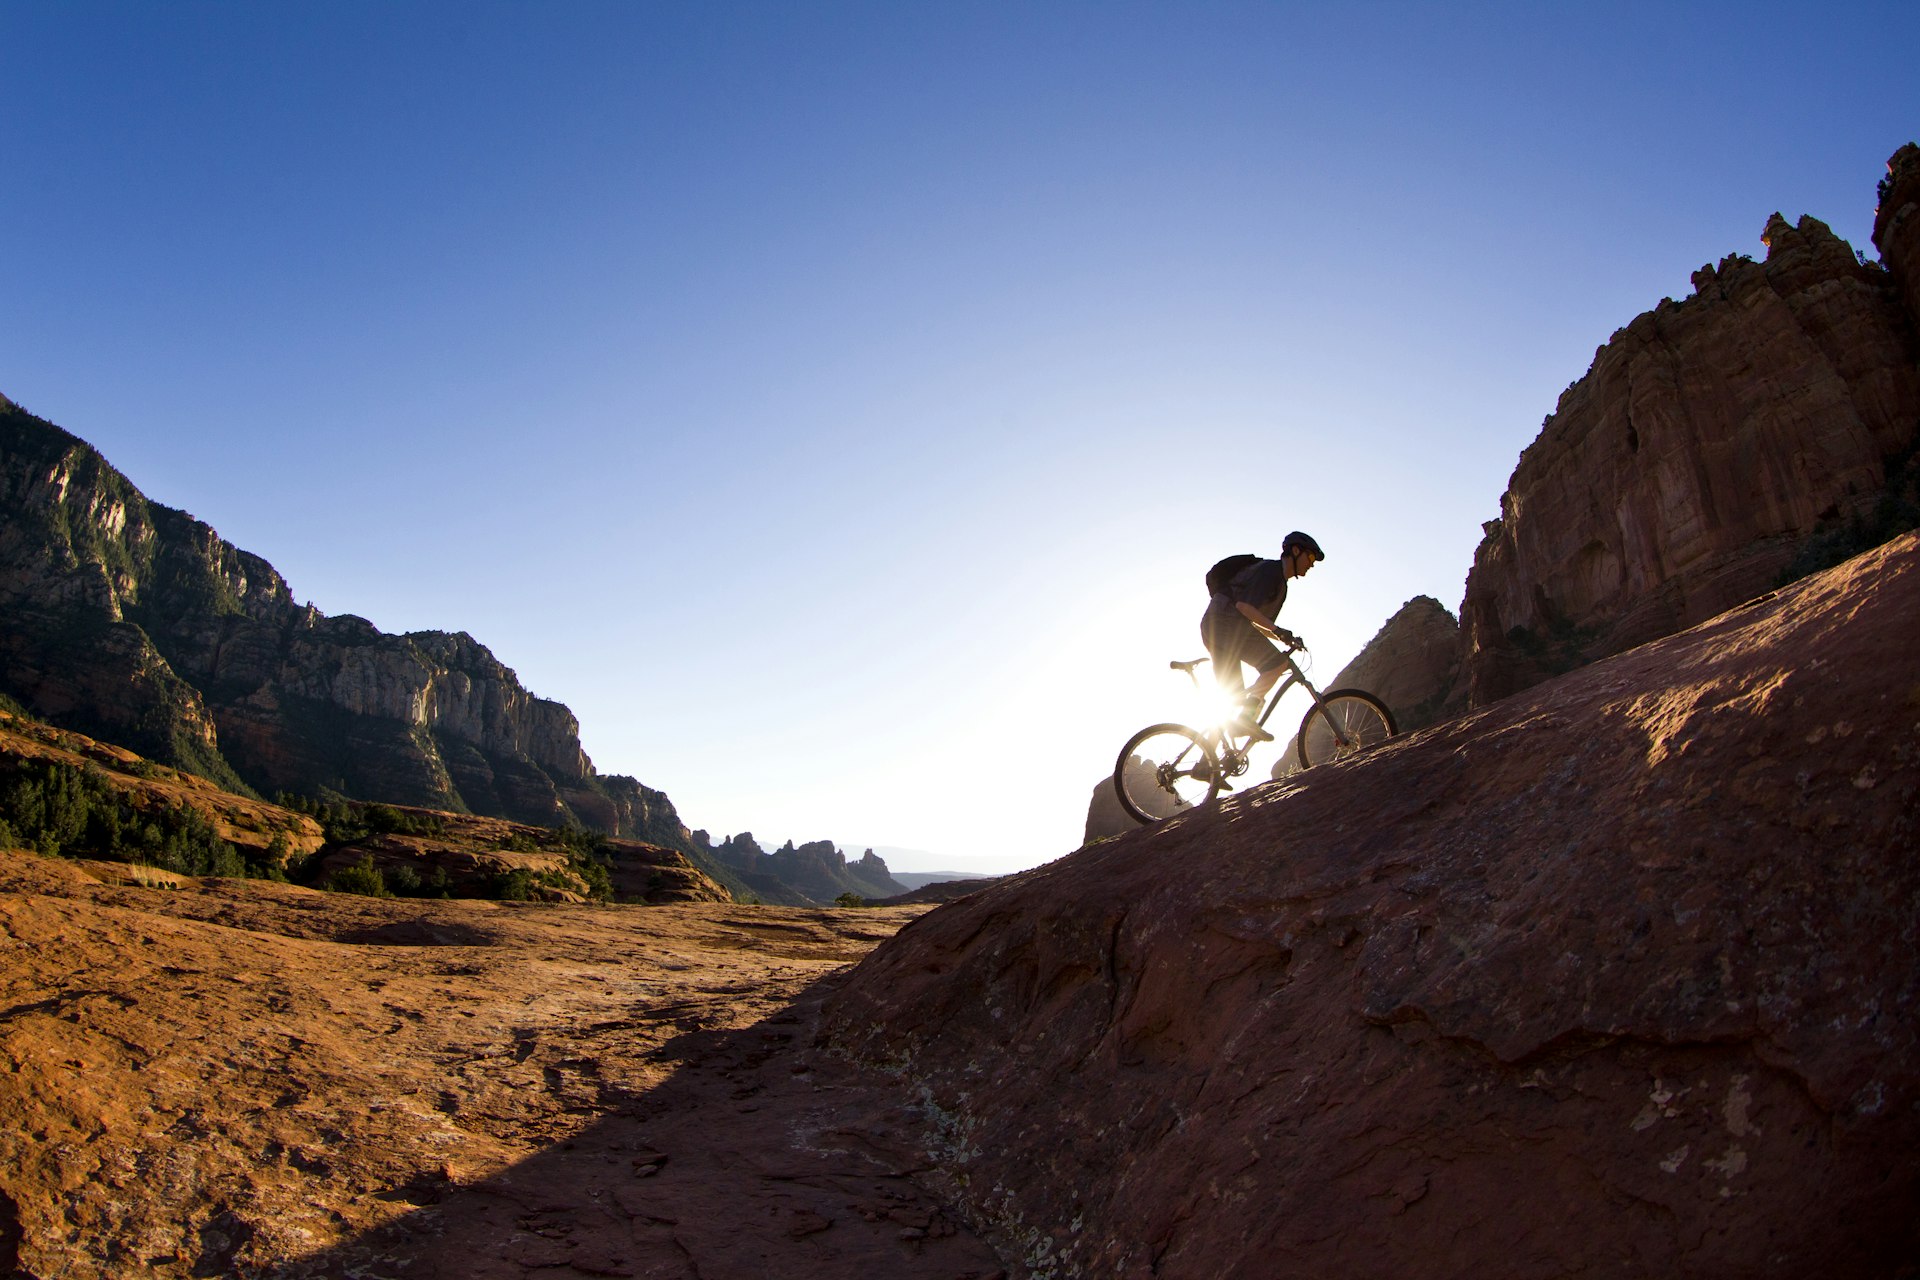 A male mountain biker rides a popular cross-country trail in Sedona, Arizona, USA